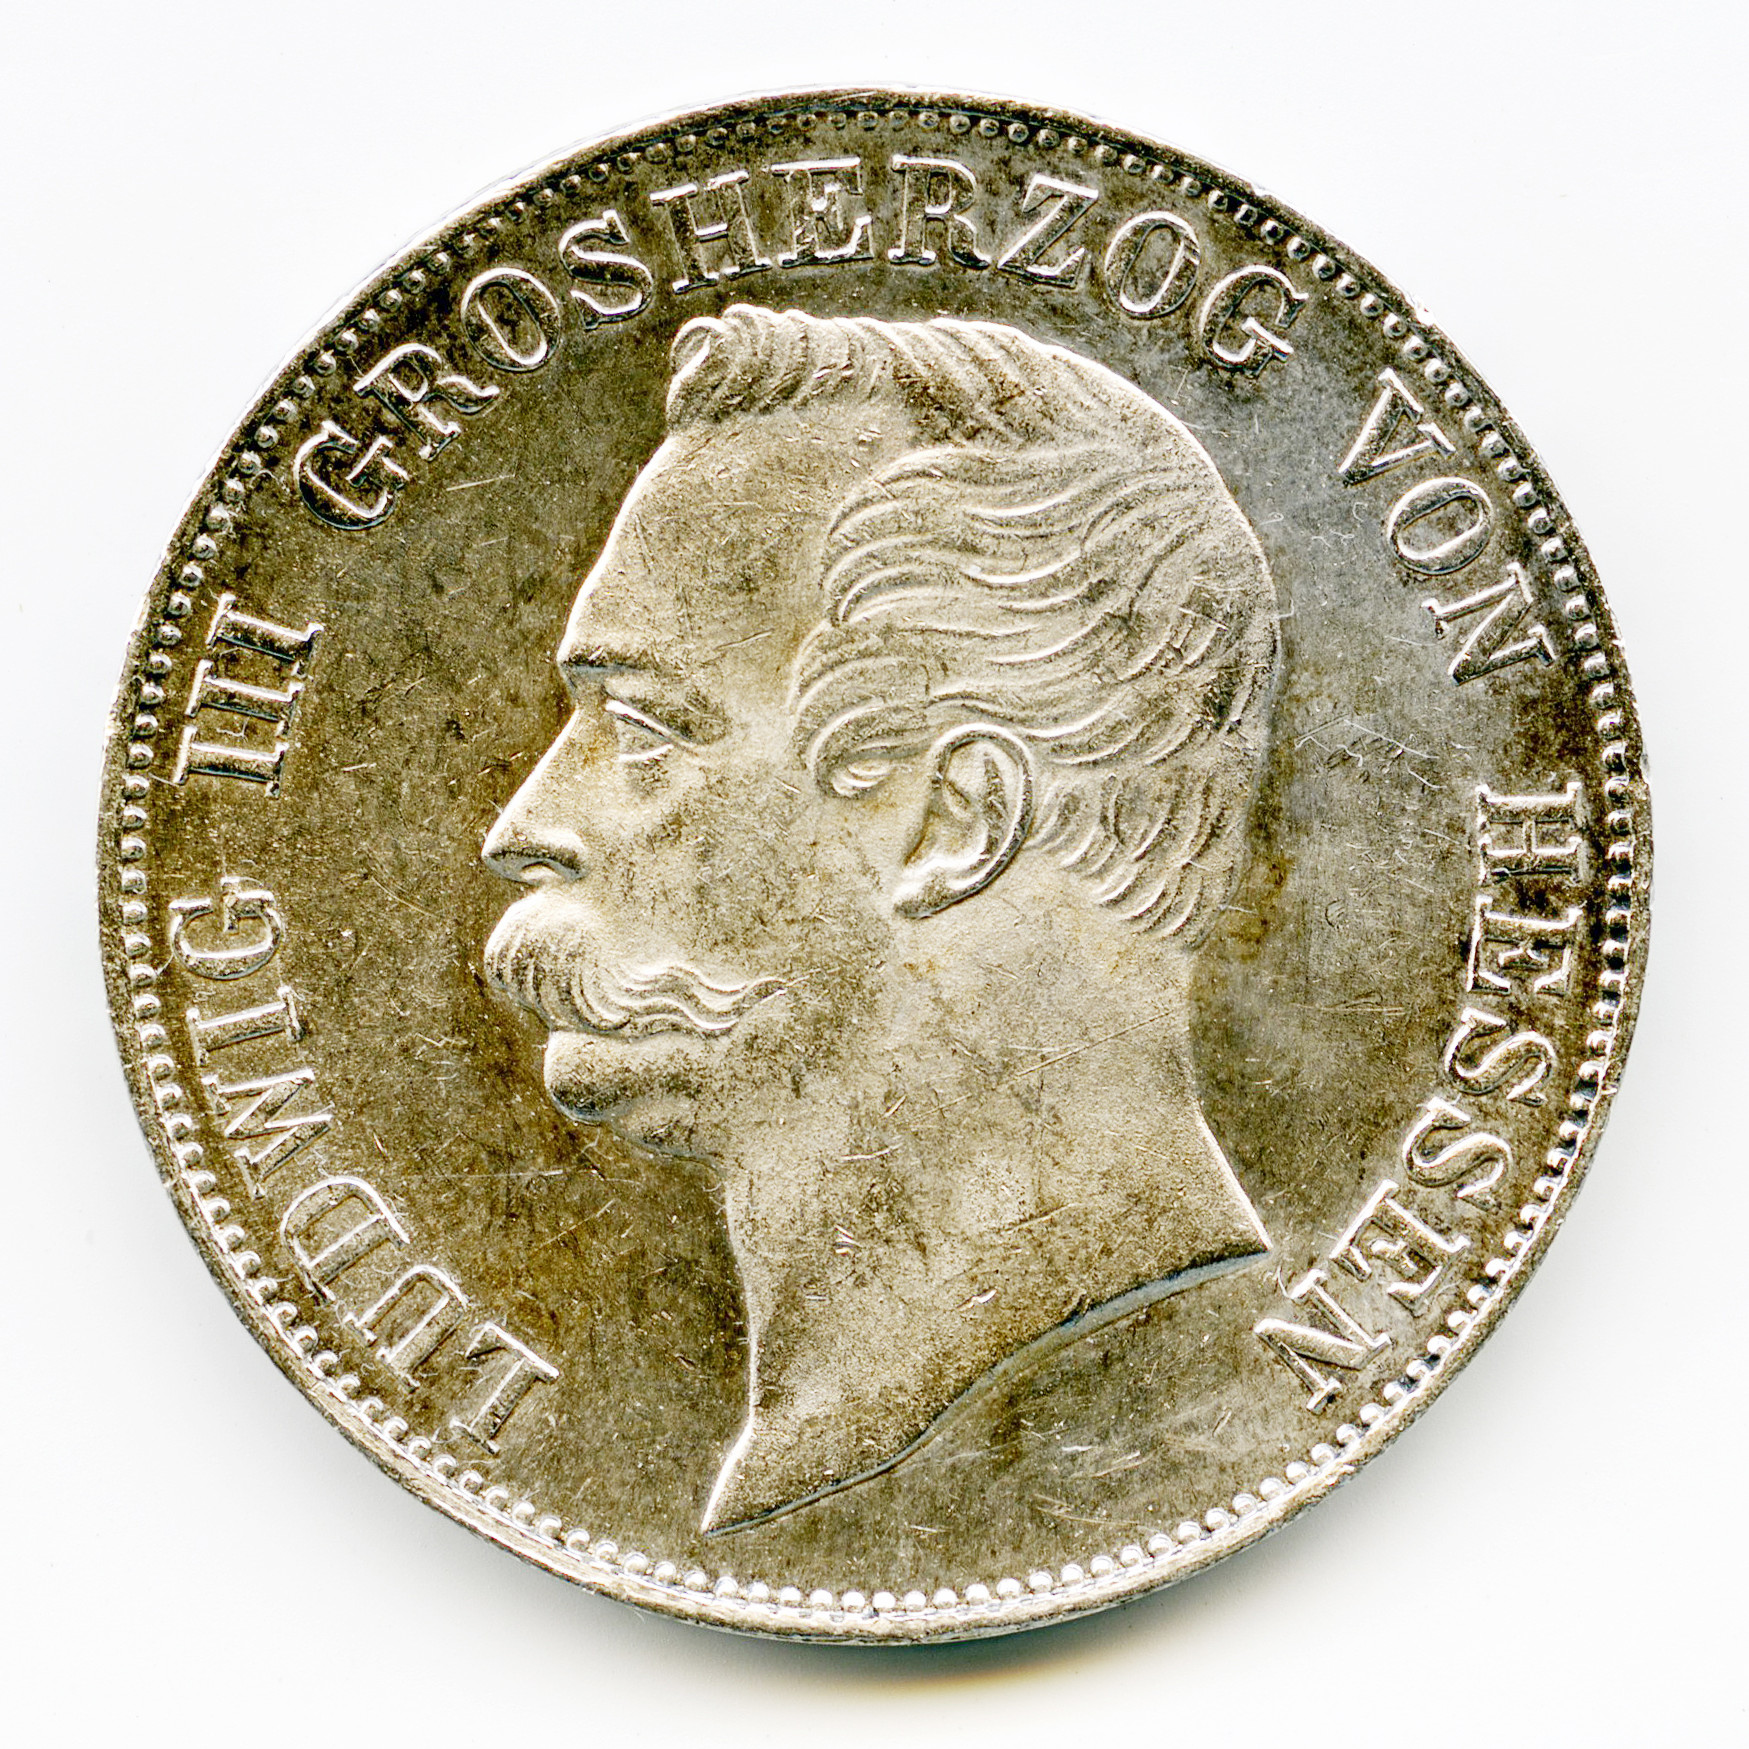 Allemagne - Ludwig III - Vereinsthaler - 1859 avers